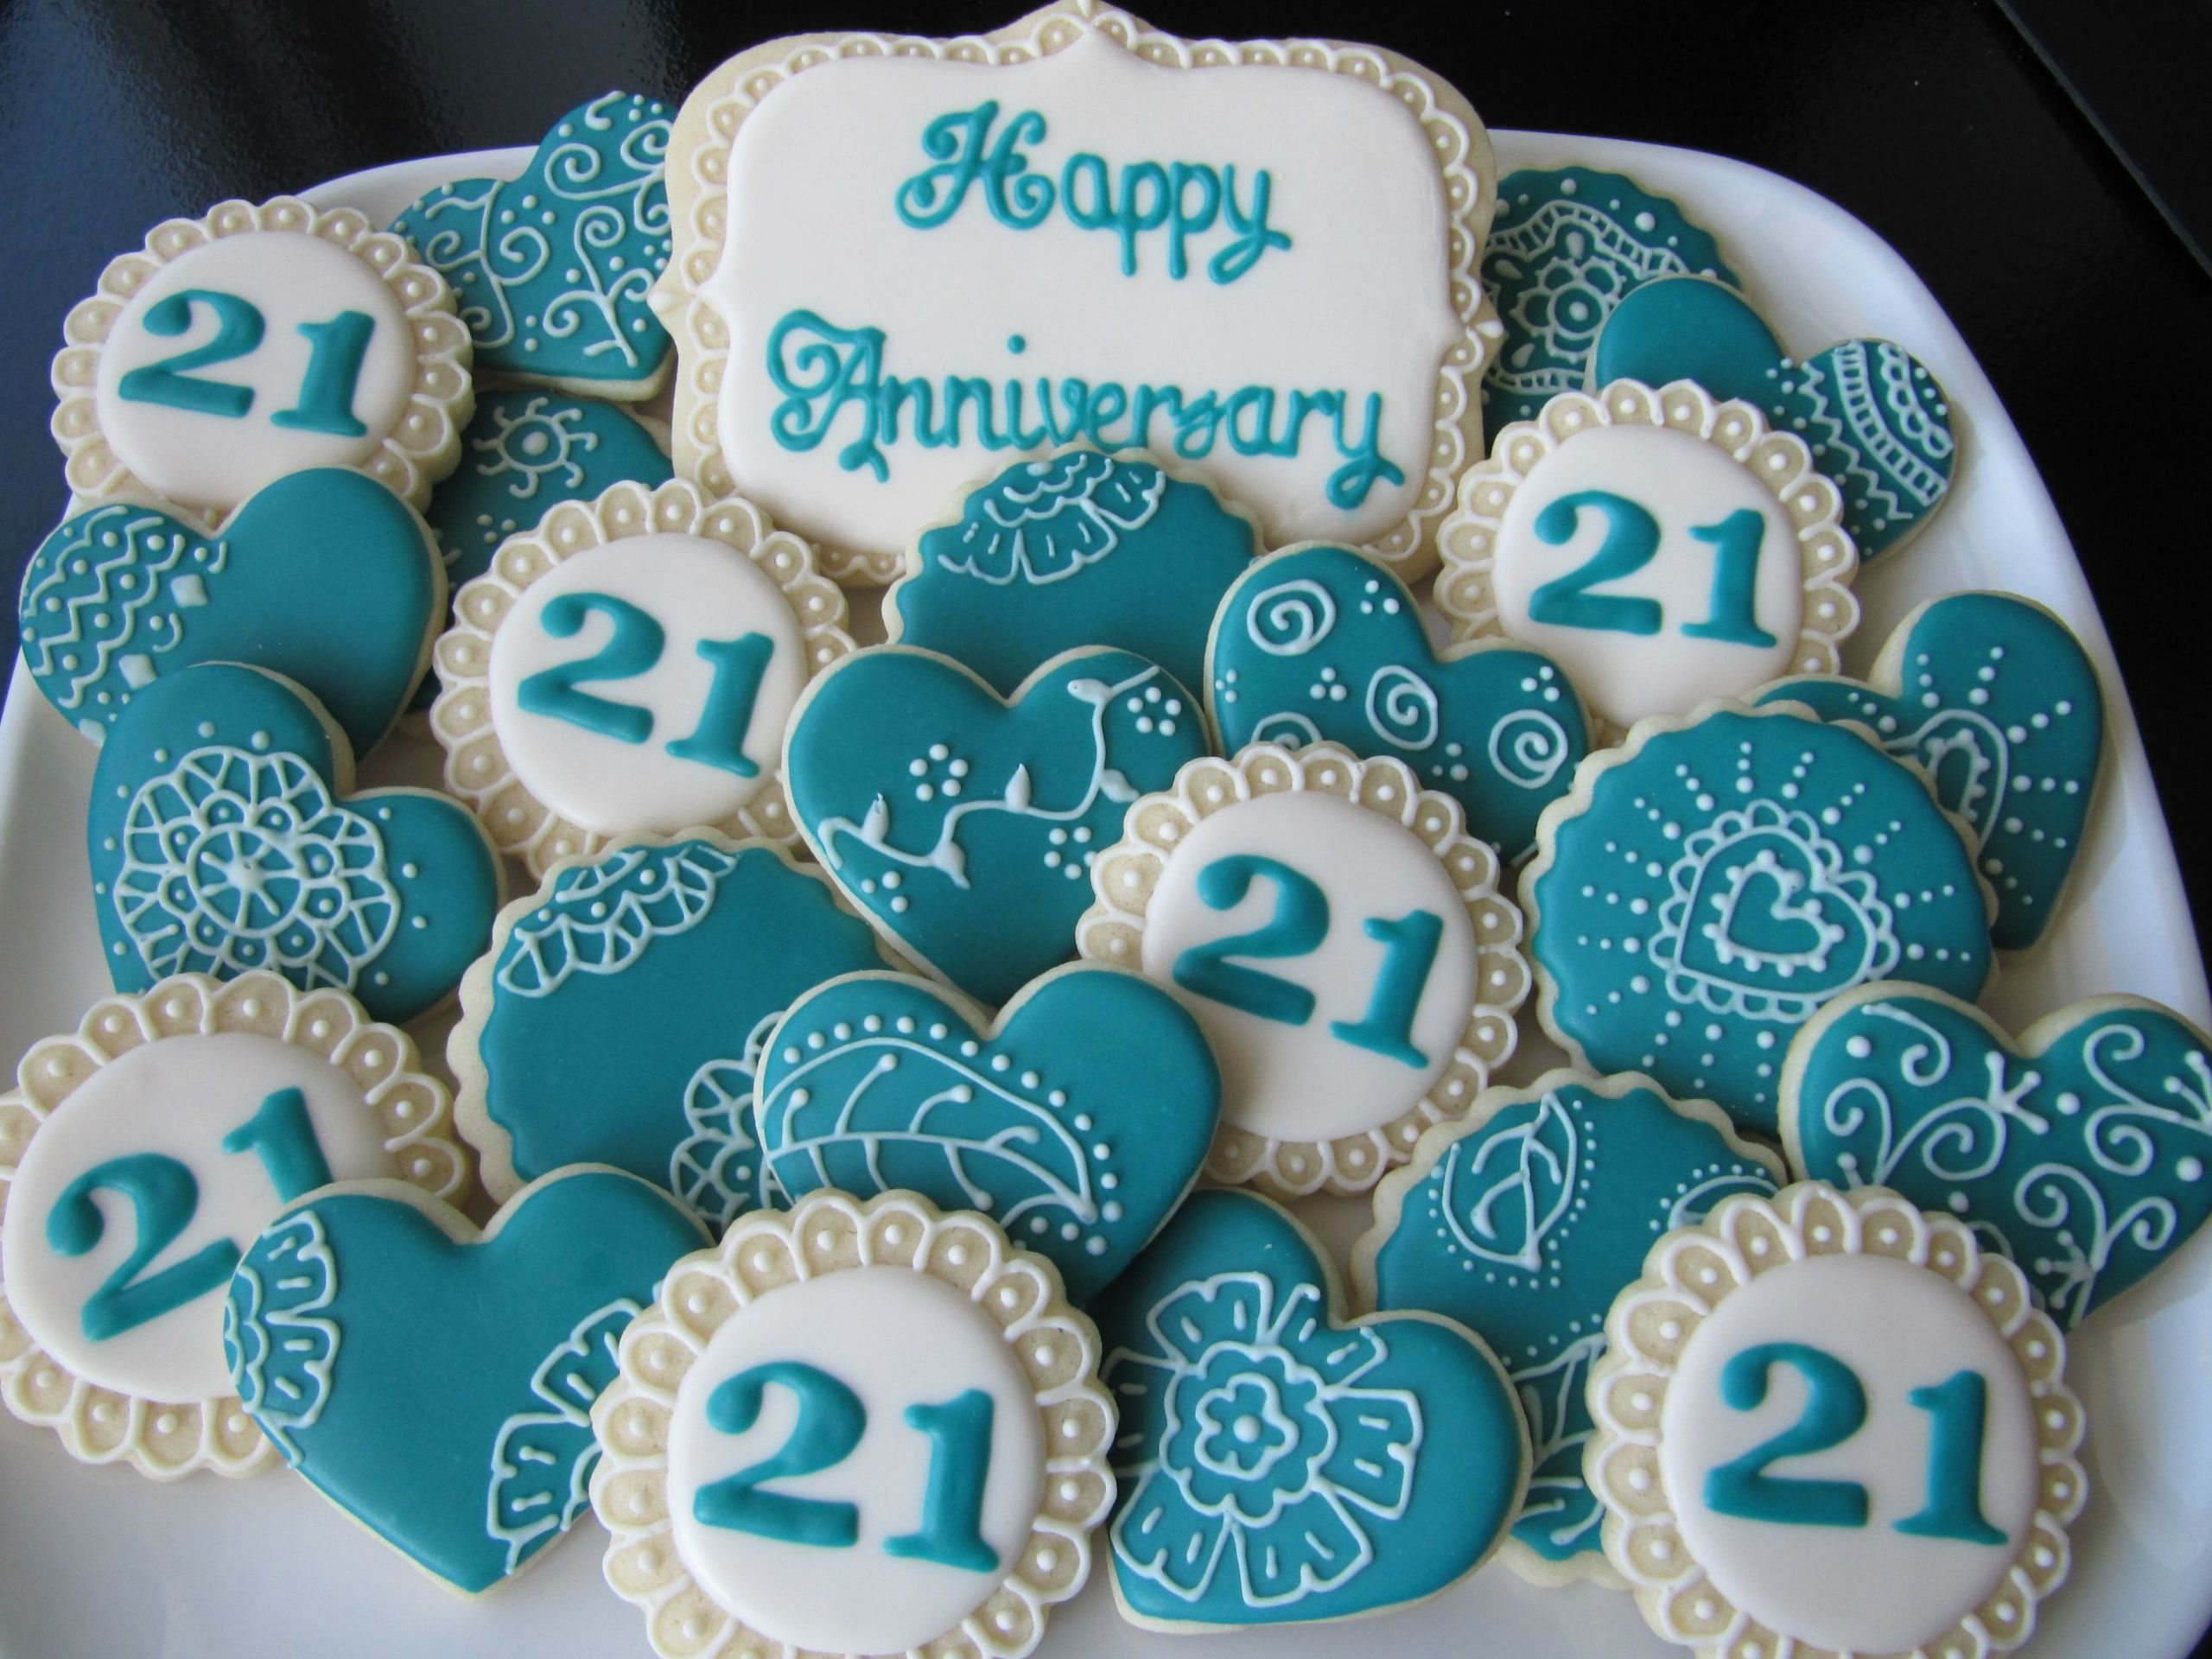 21St Wedding Anniversary Gift Ideas
 21st wedding anniversary sugar cookies